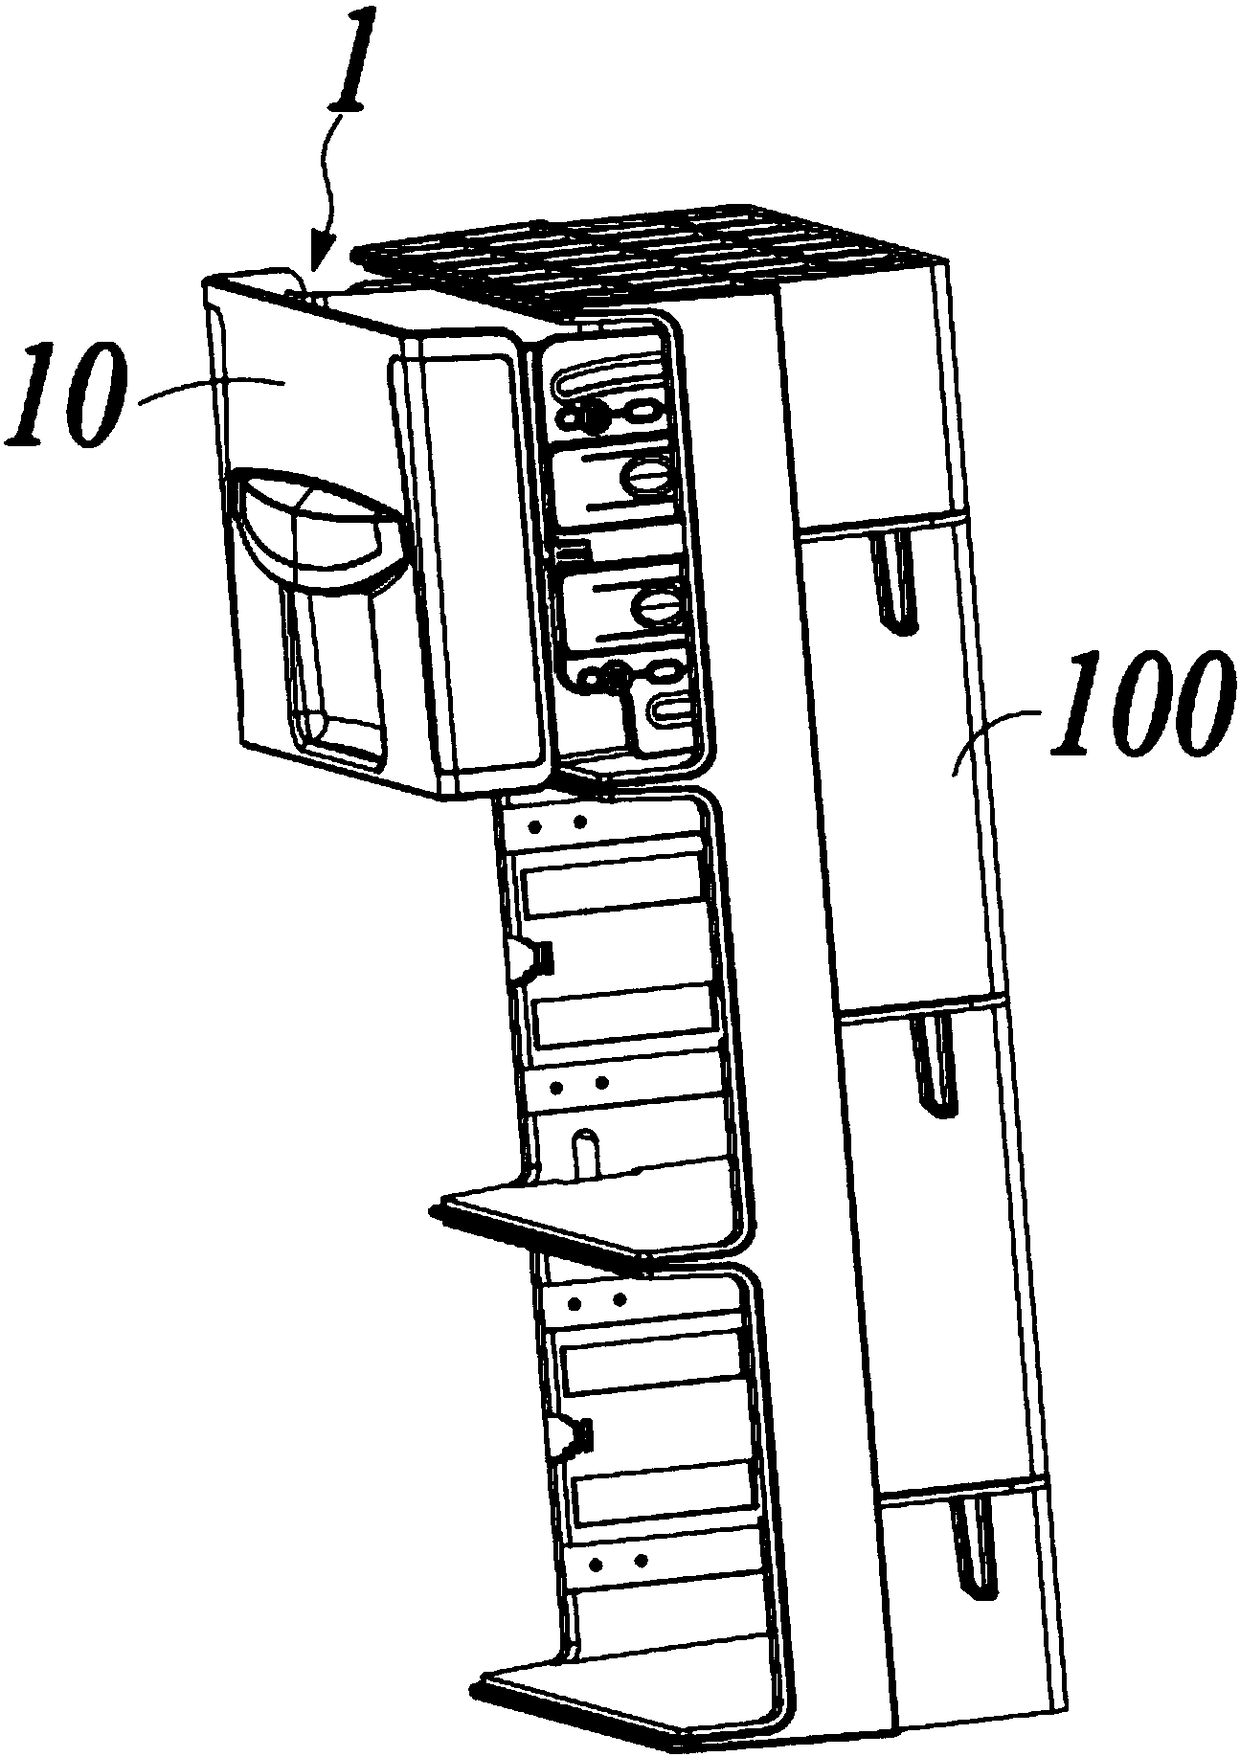 Refrigerator, refrigerator door body and reversible bottle holder